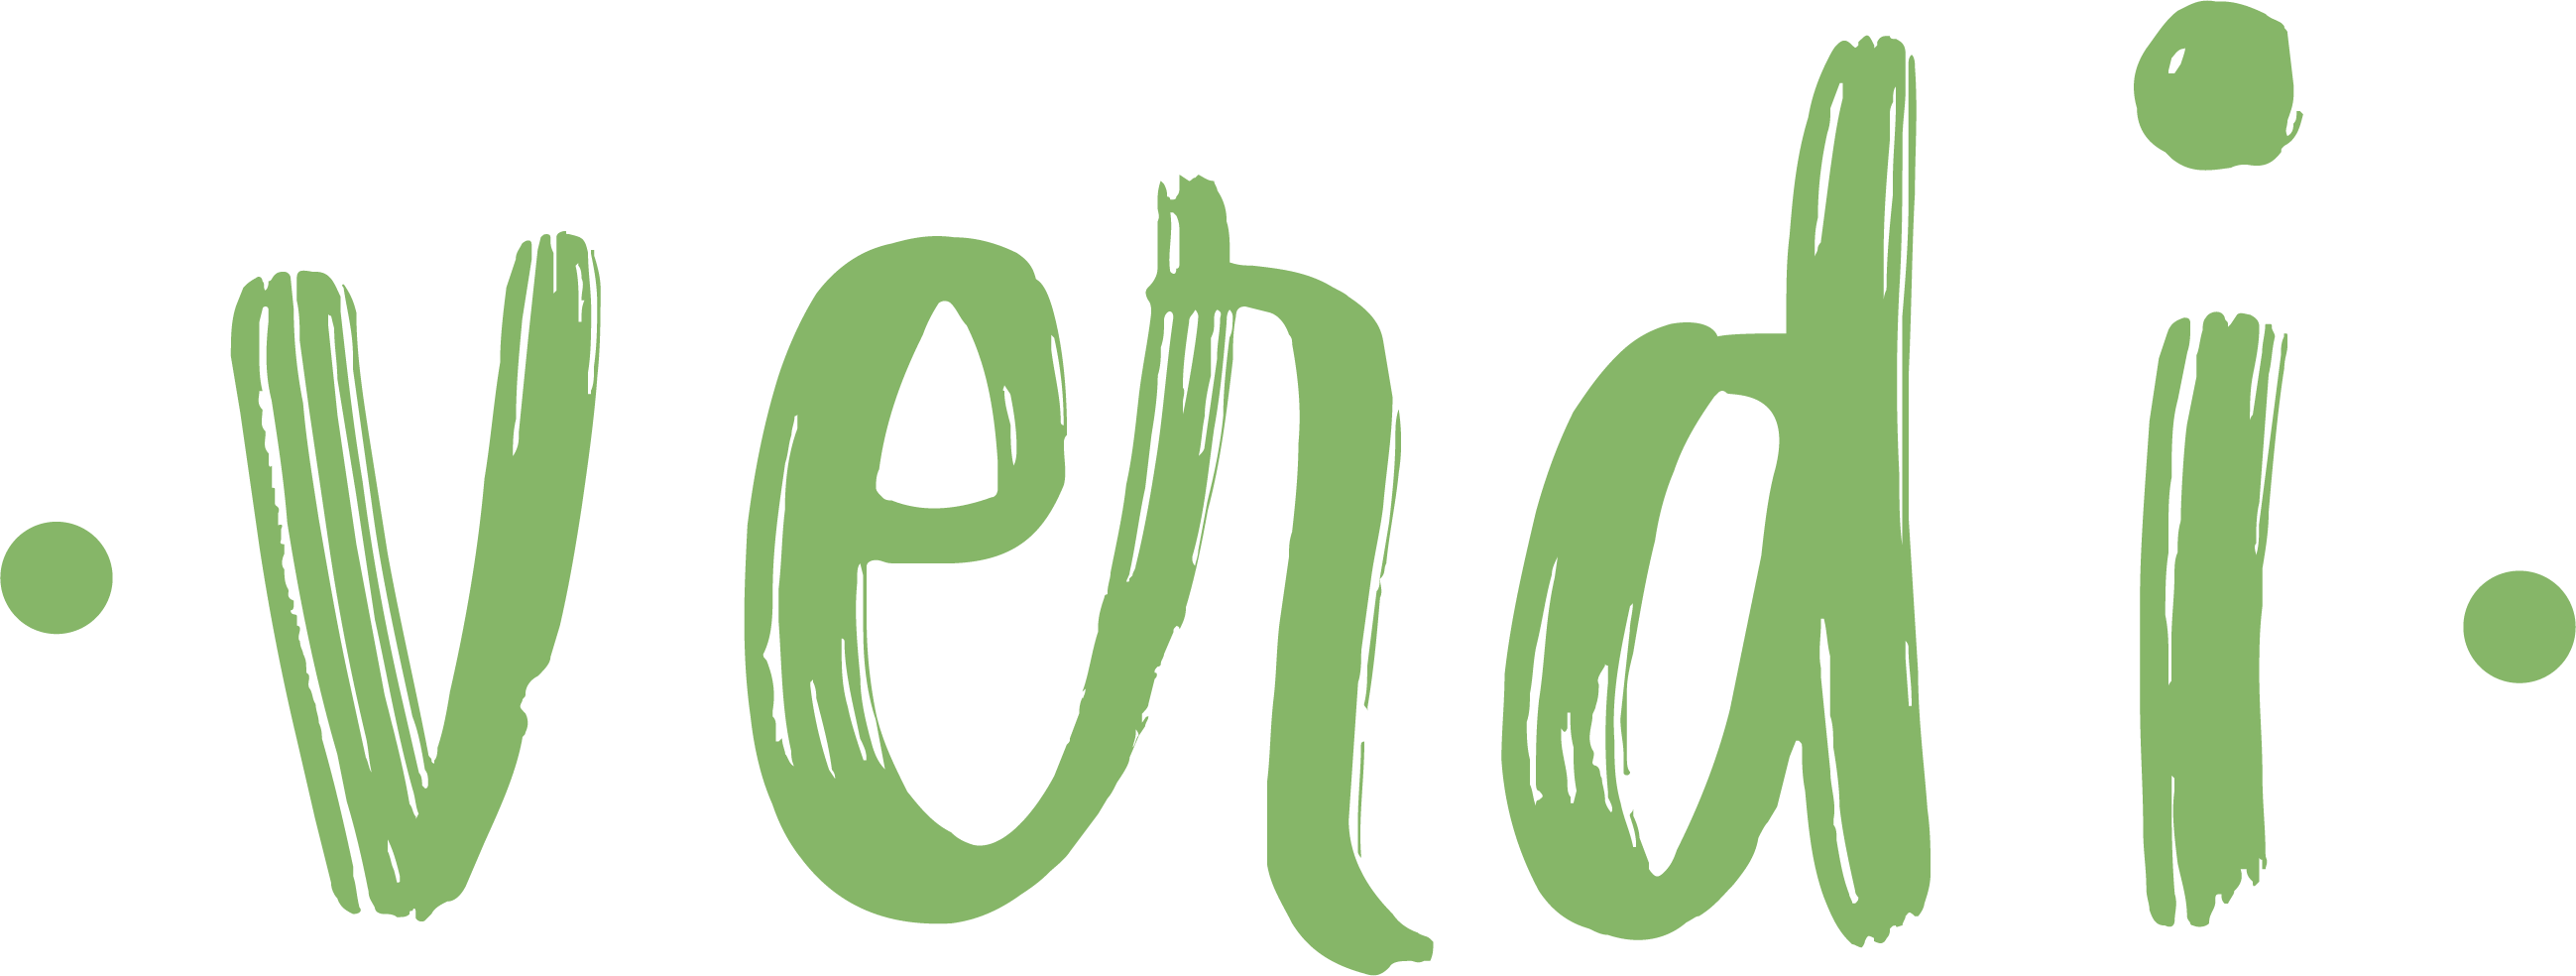 verdi-logotipo